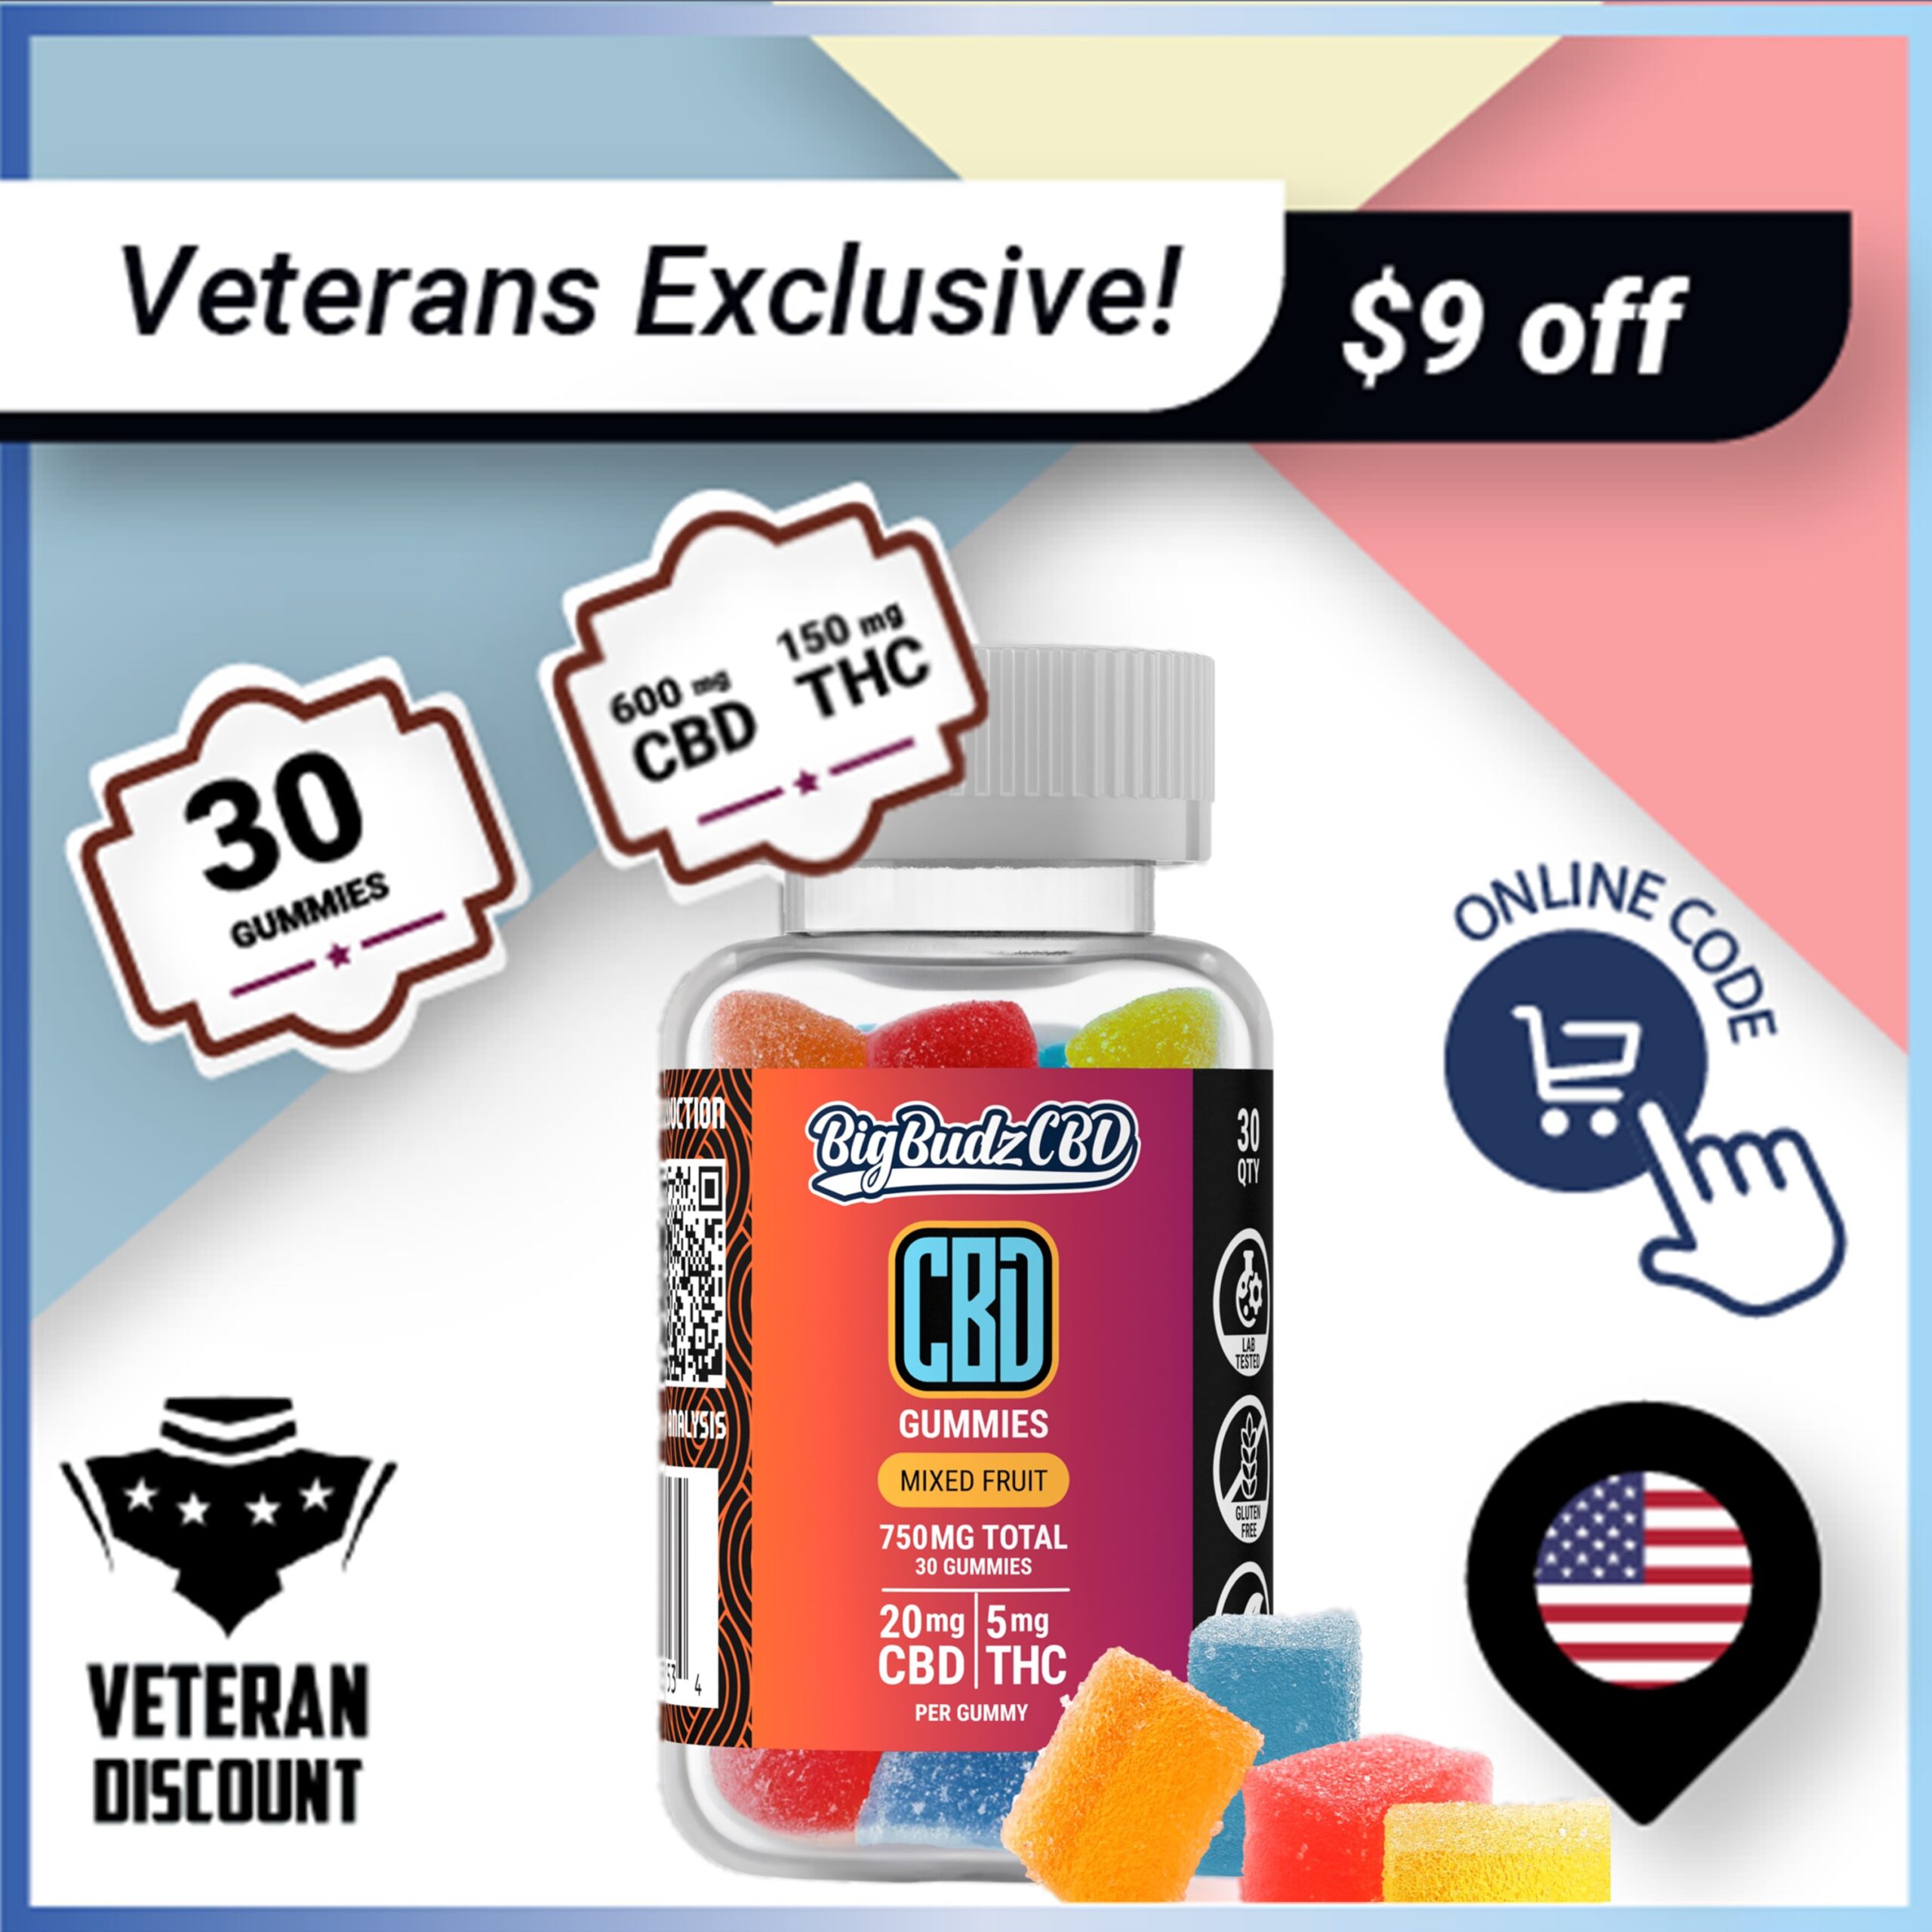 (veteran discount coupon) 30 count FSO gummies $9 off